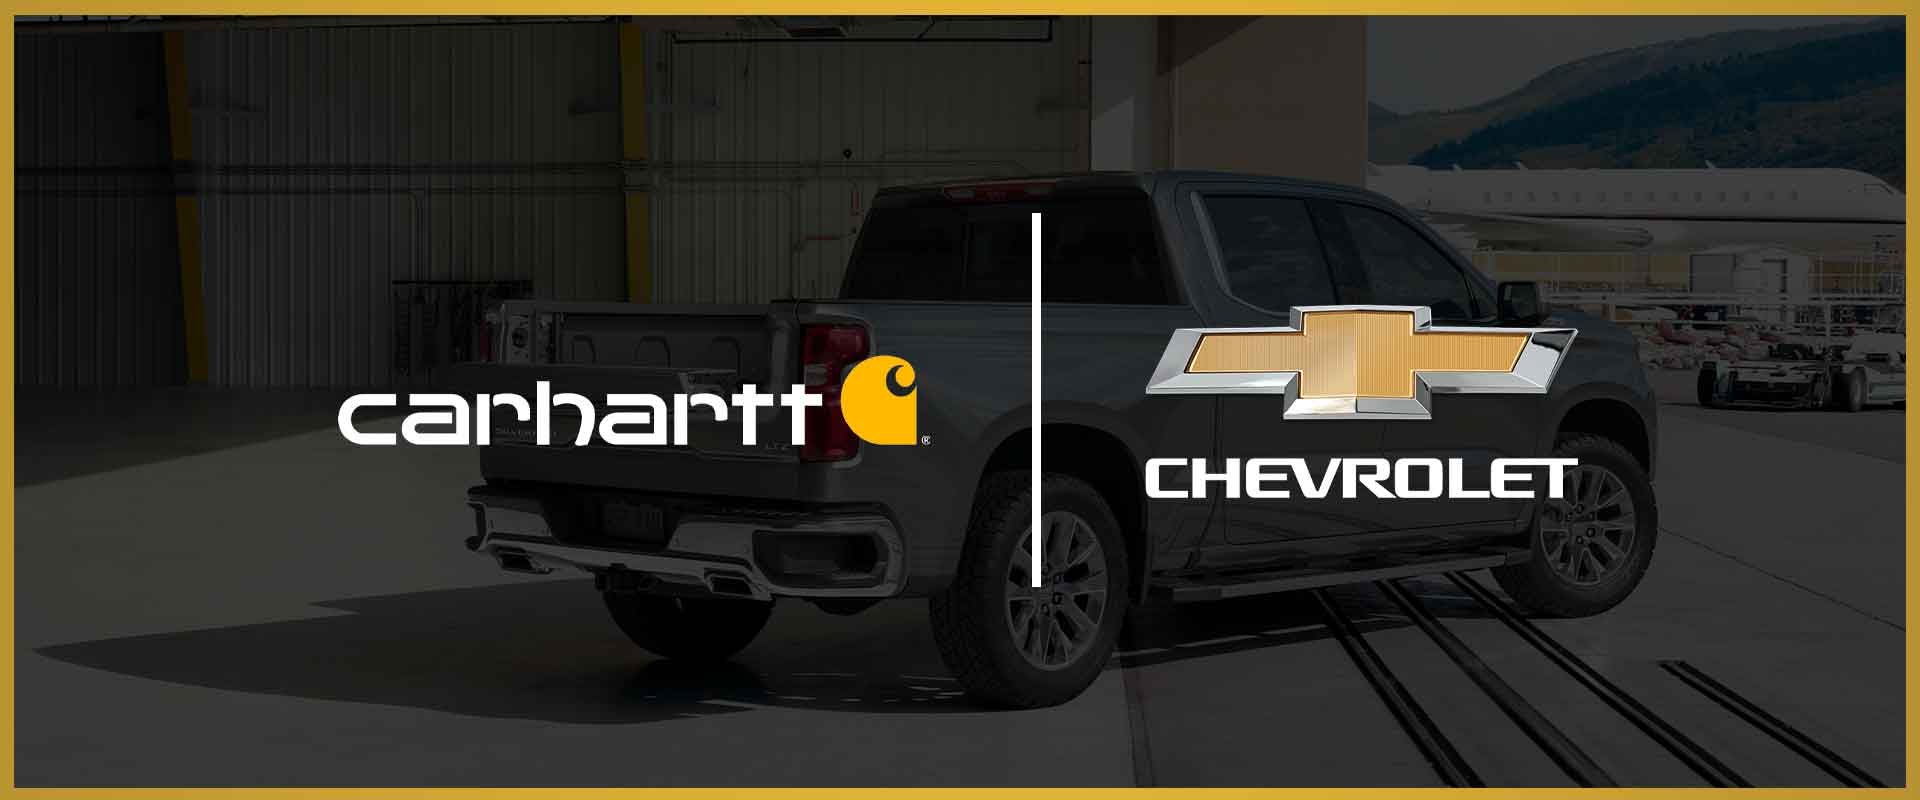 2021 Chevrolet Silverado Carhartt